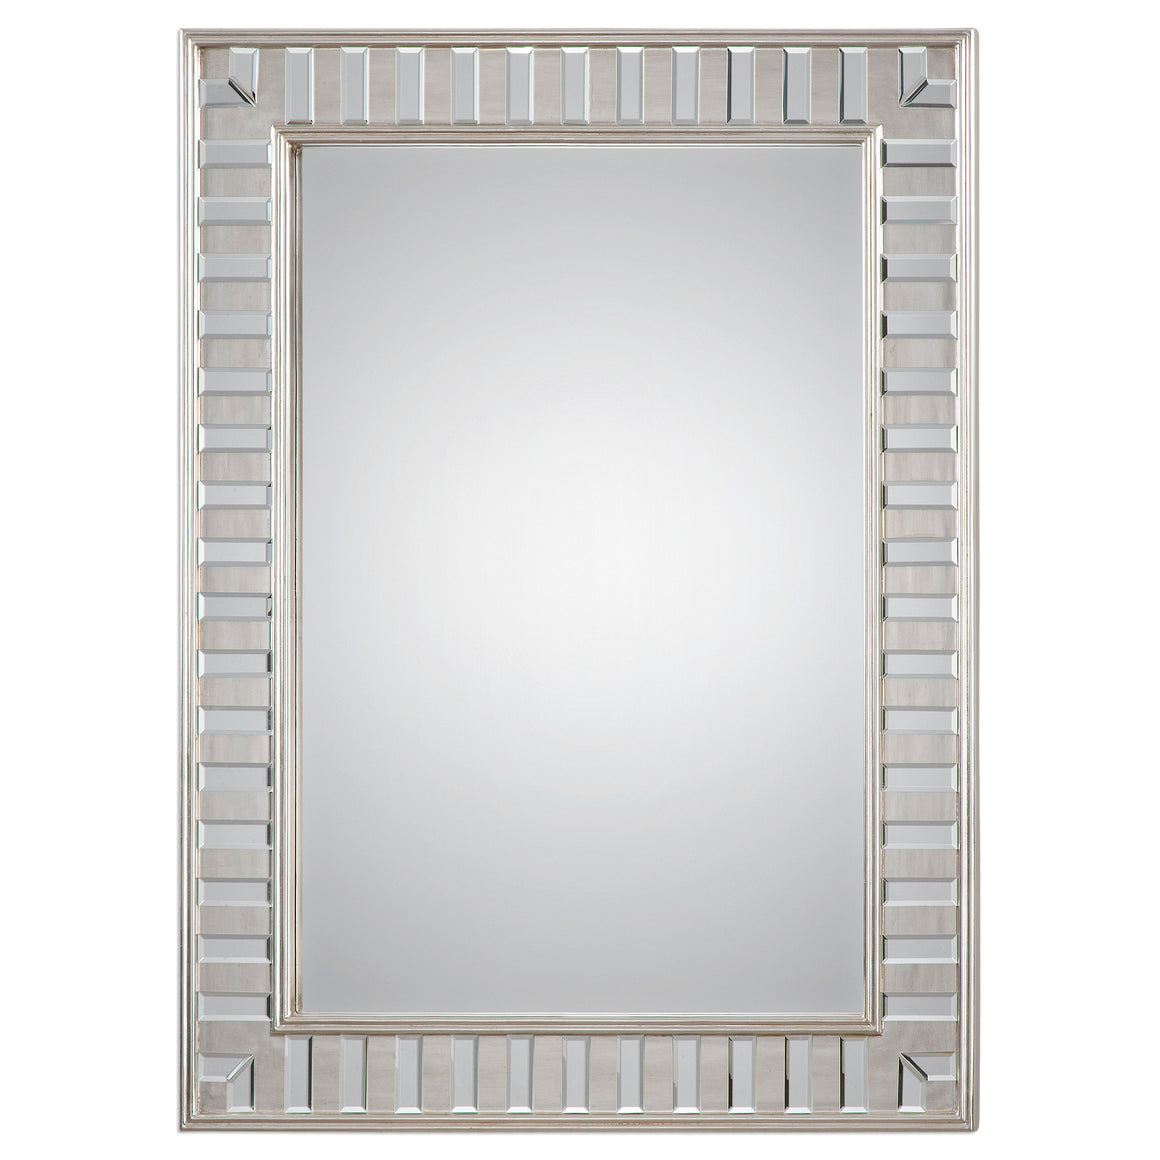 Lanester Silver Leaf Mirror